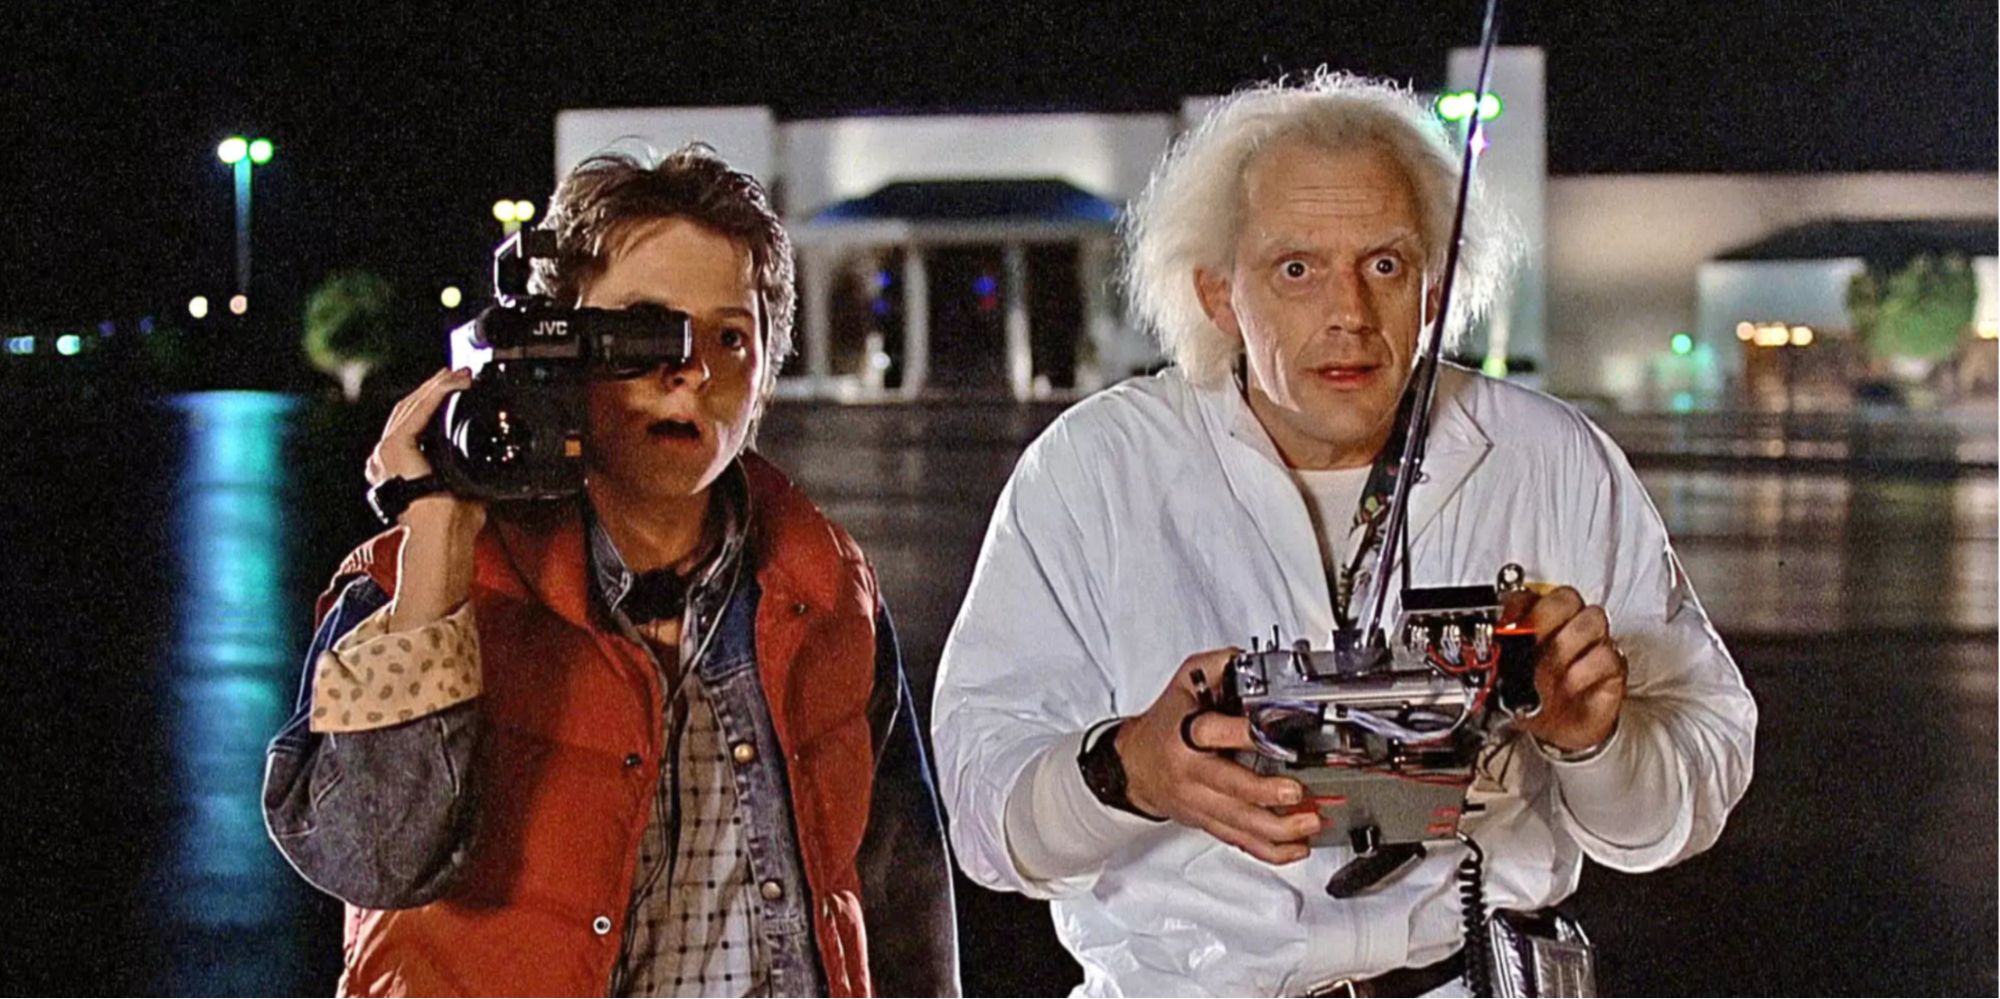 Michael J. Fox and Christopher Lloyd testing the Delorean 